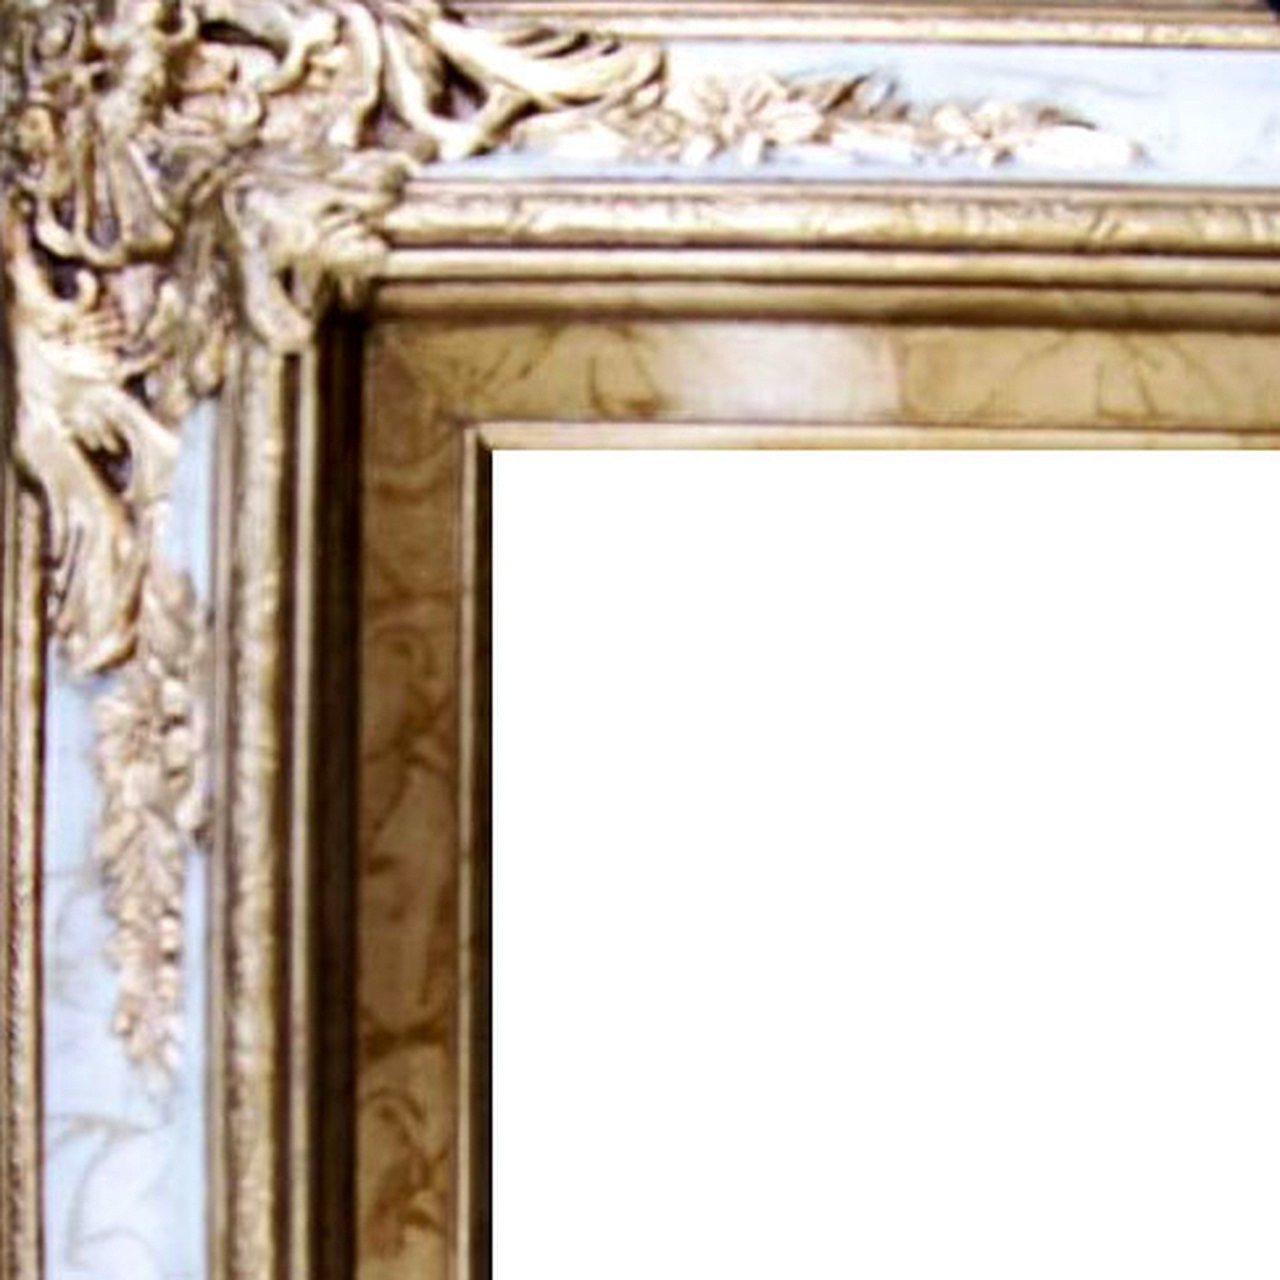 4" Ornate Wood Frames: 16X16*